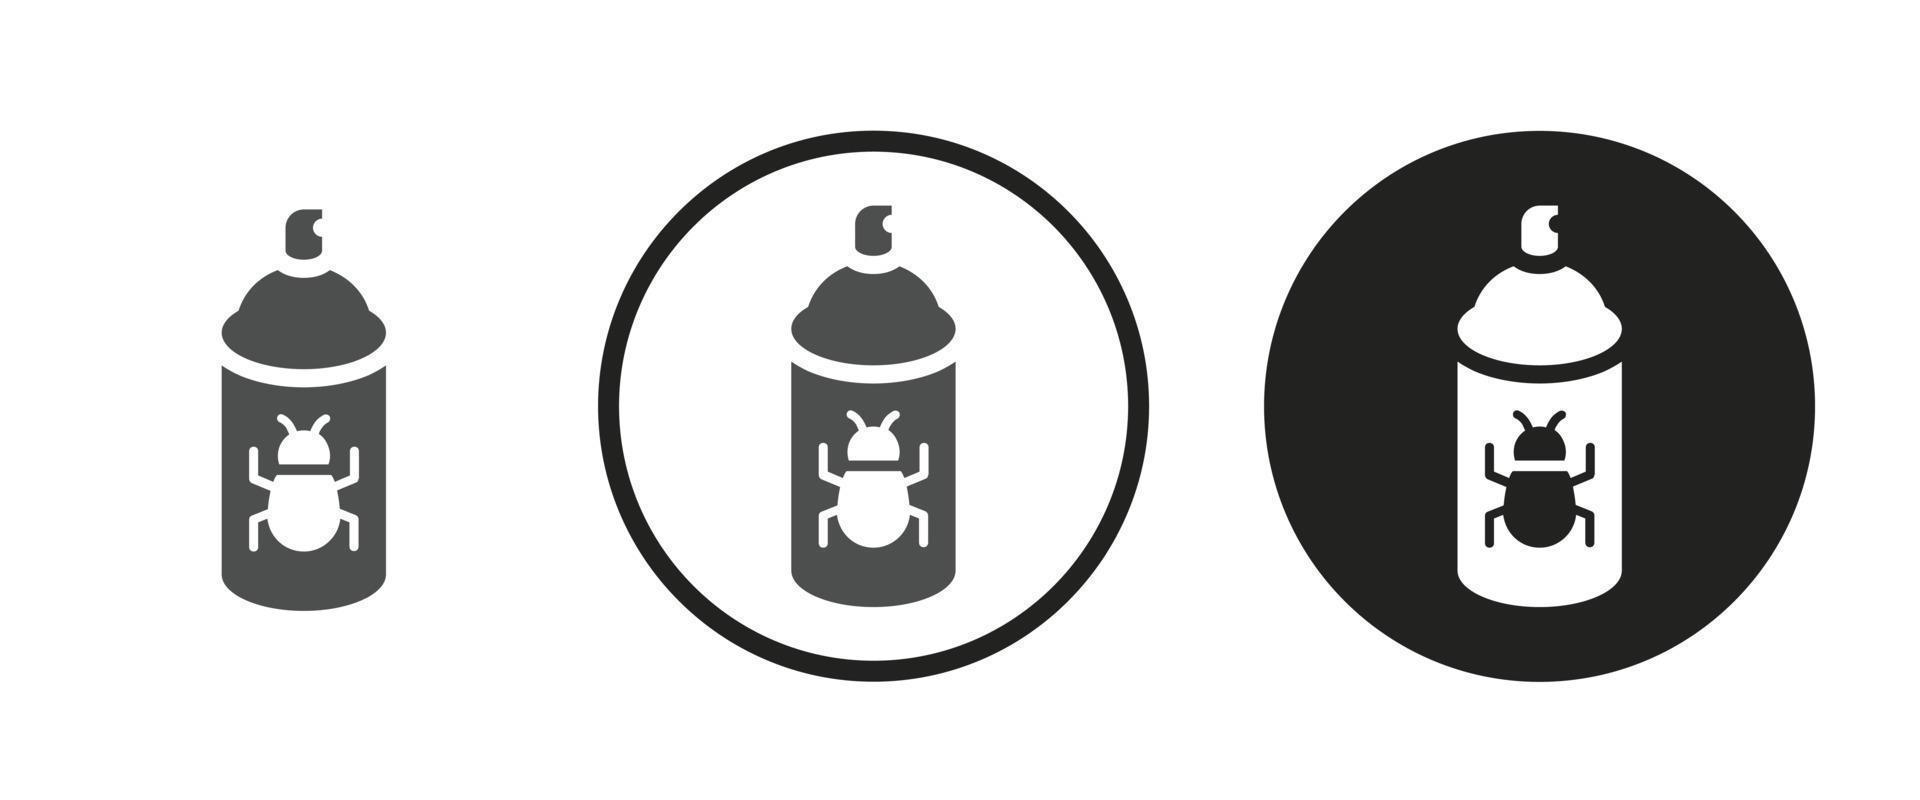 Insecticide spray icon . web icon set .vector illustration vector